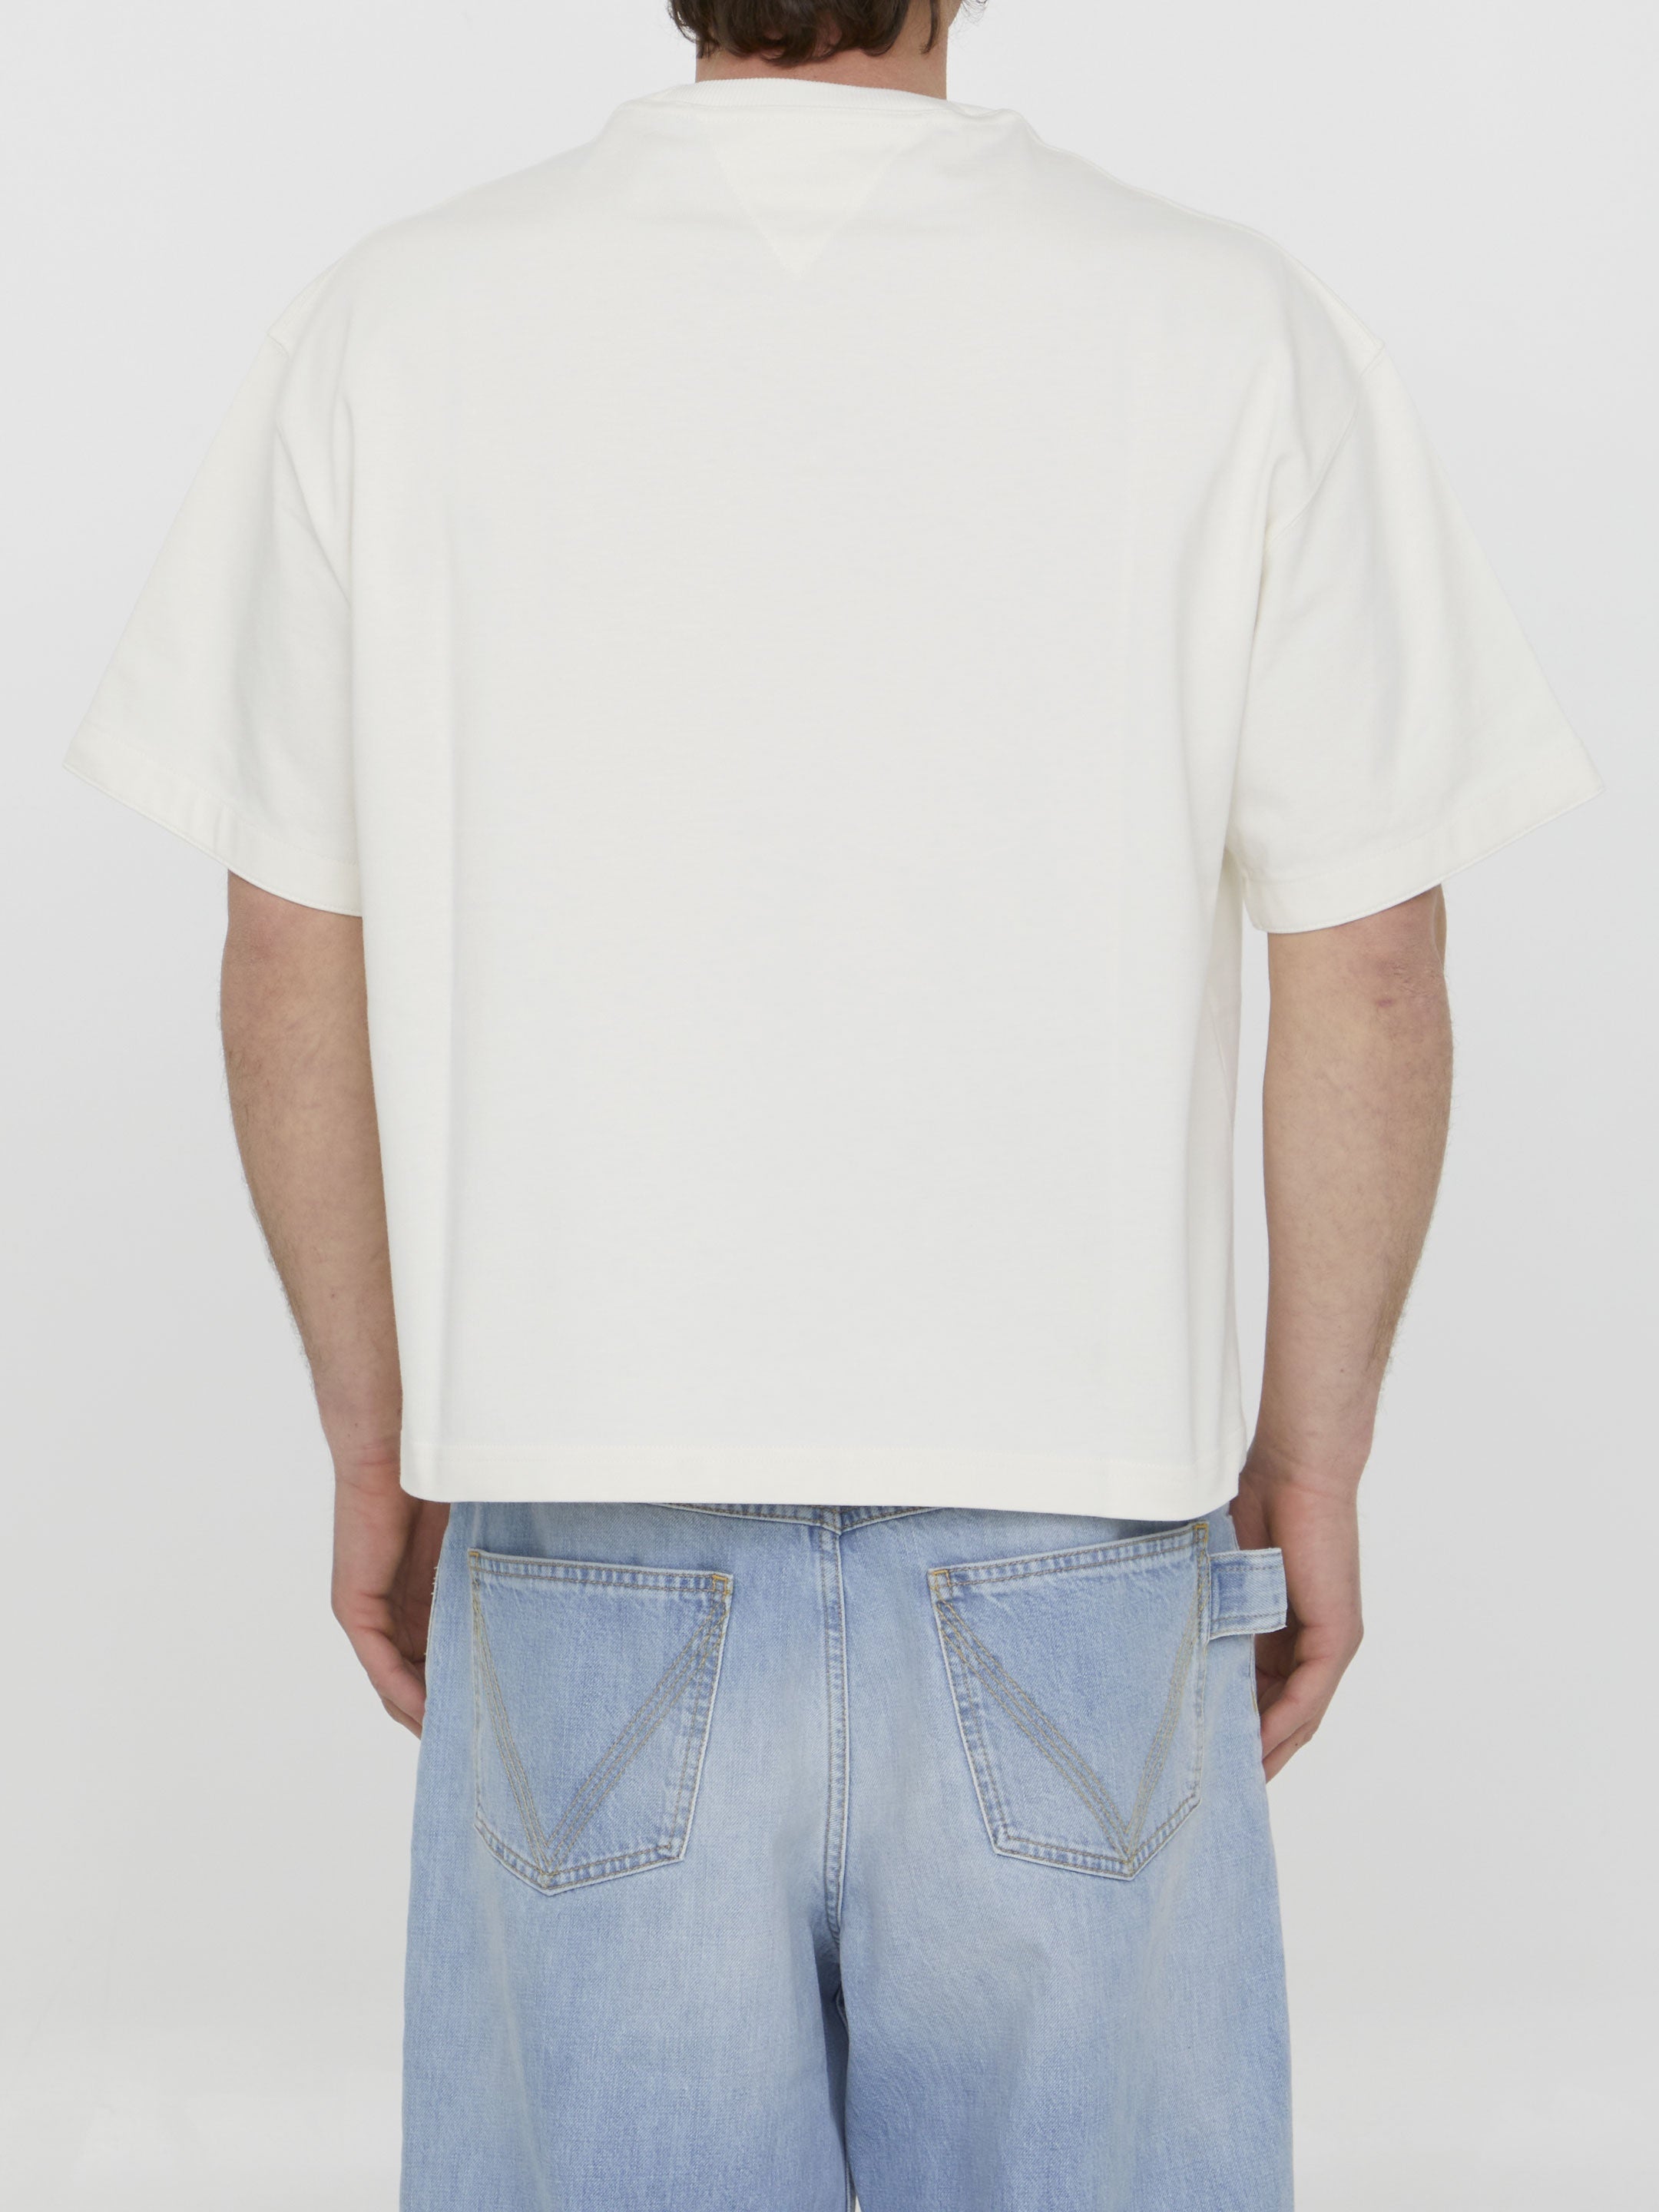 Cream-colored cotton t-shirt